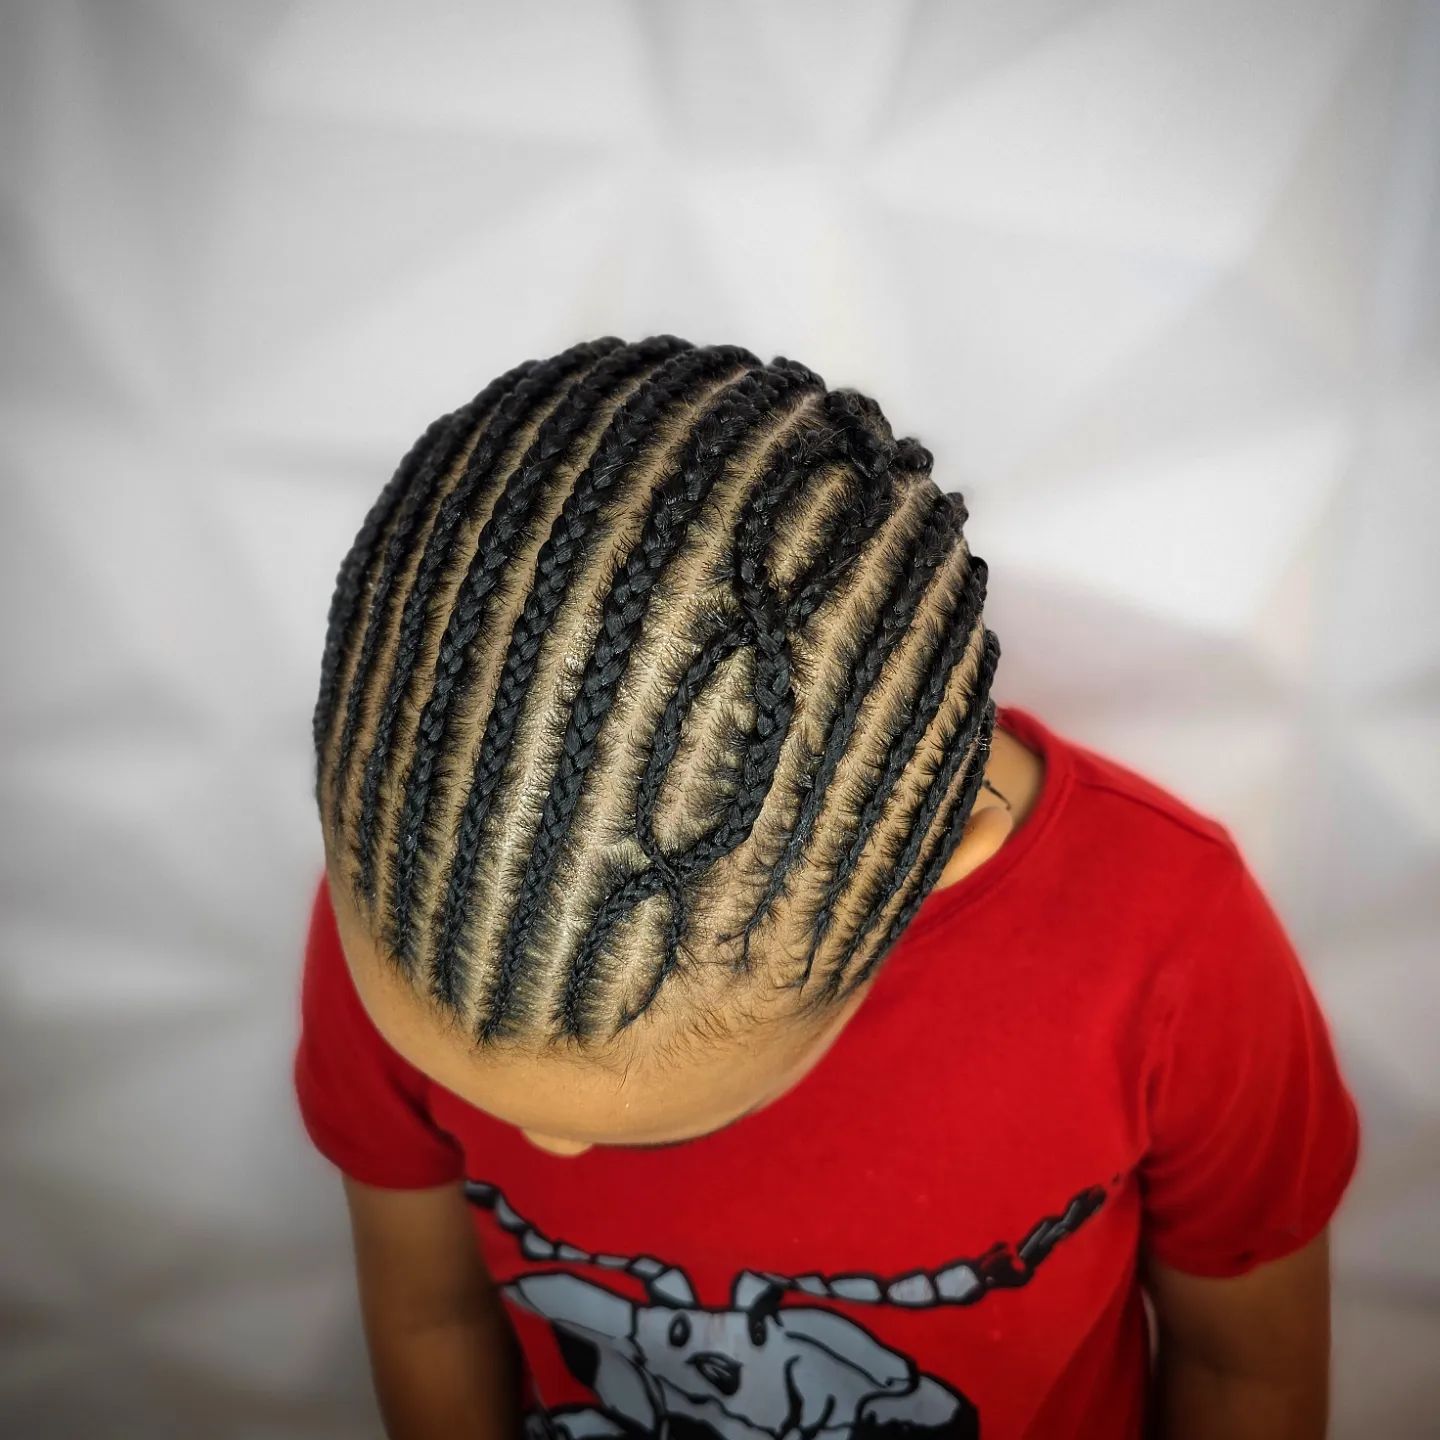 Braid Hairstyles for men 51 Black male braids short hair | Box braids men | Braid styles for men gallery Braid Hairstyles for Men